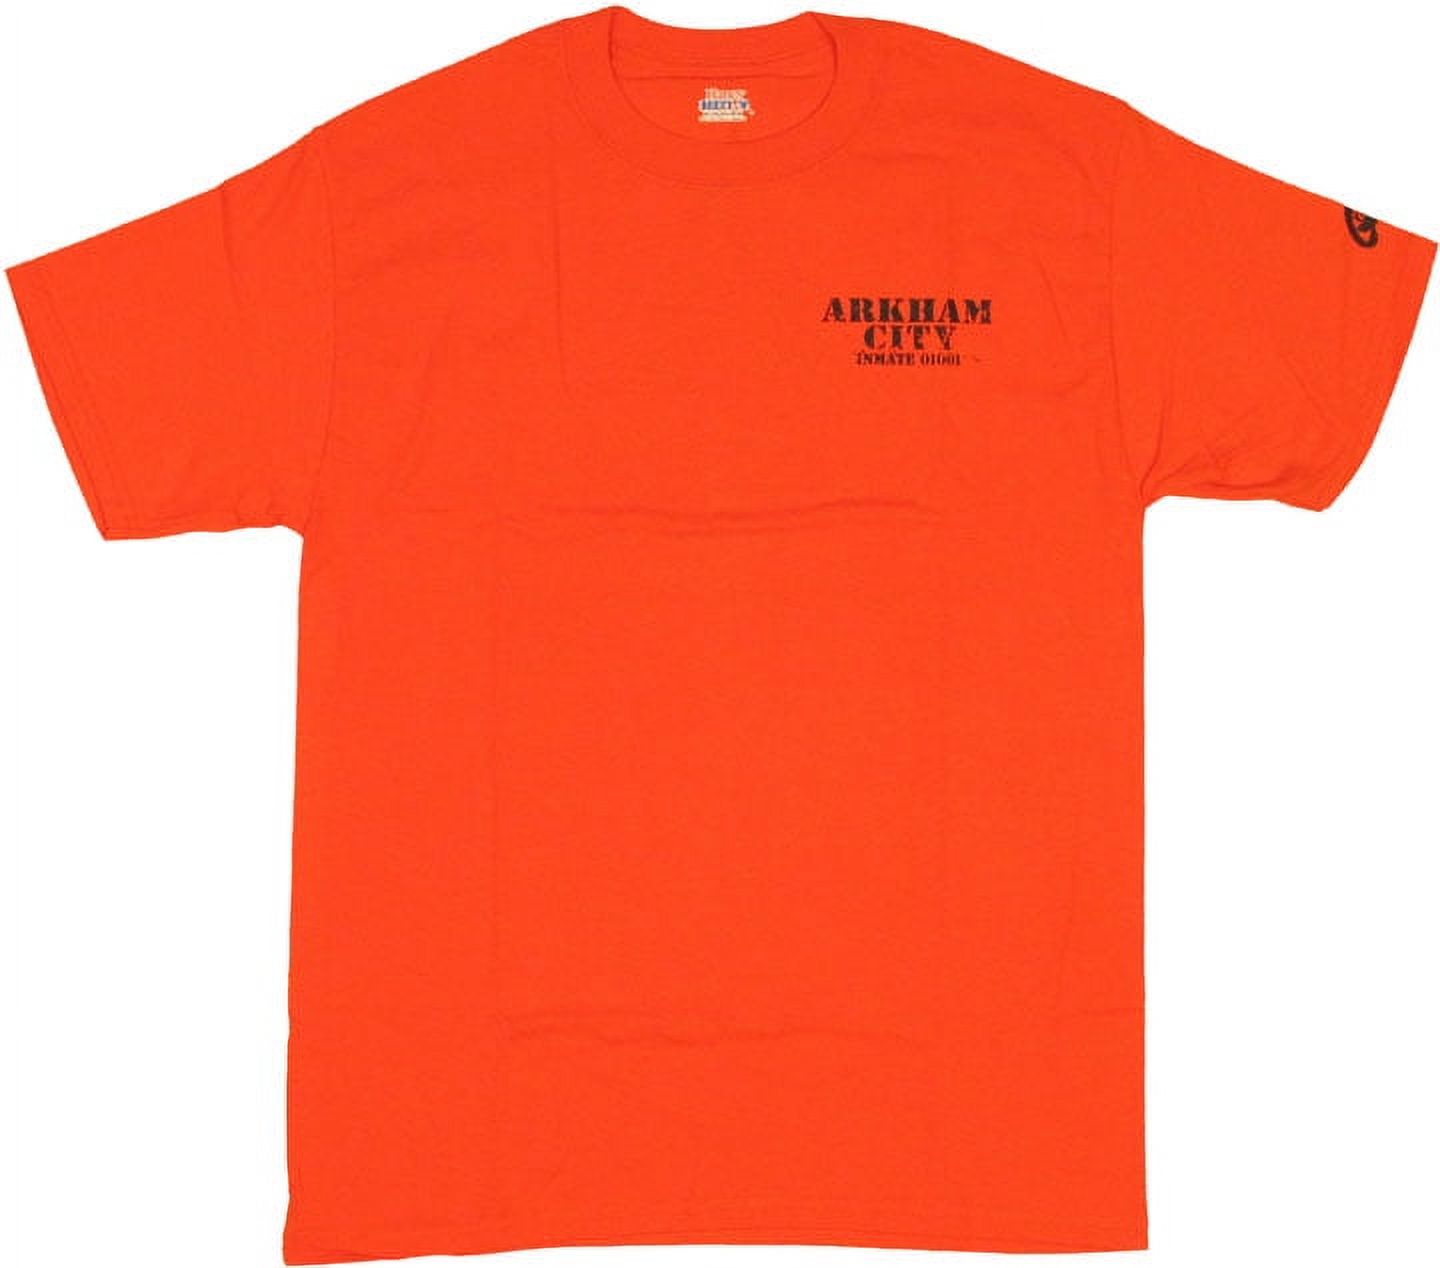 Batman Arkham City Inmate T Shirt - image 1 of 2